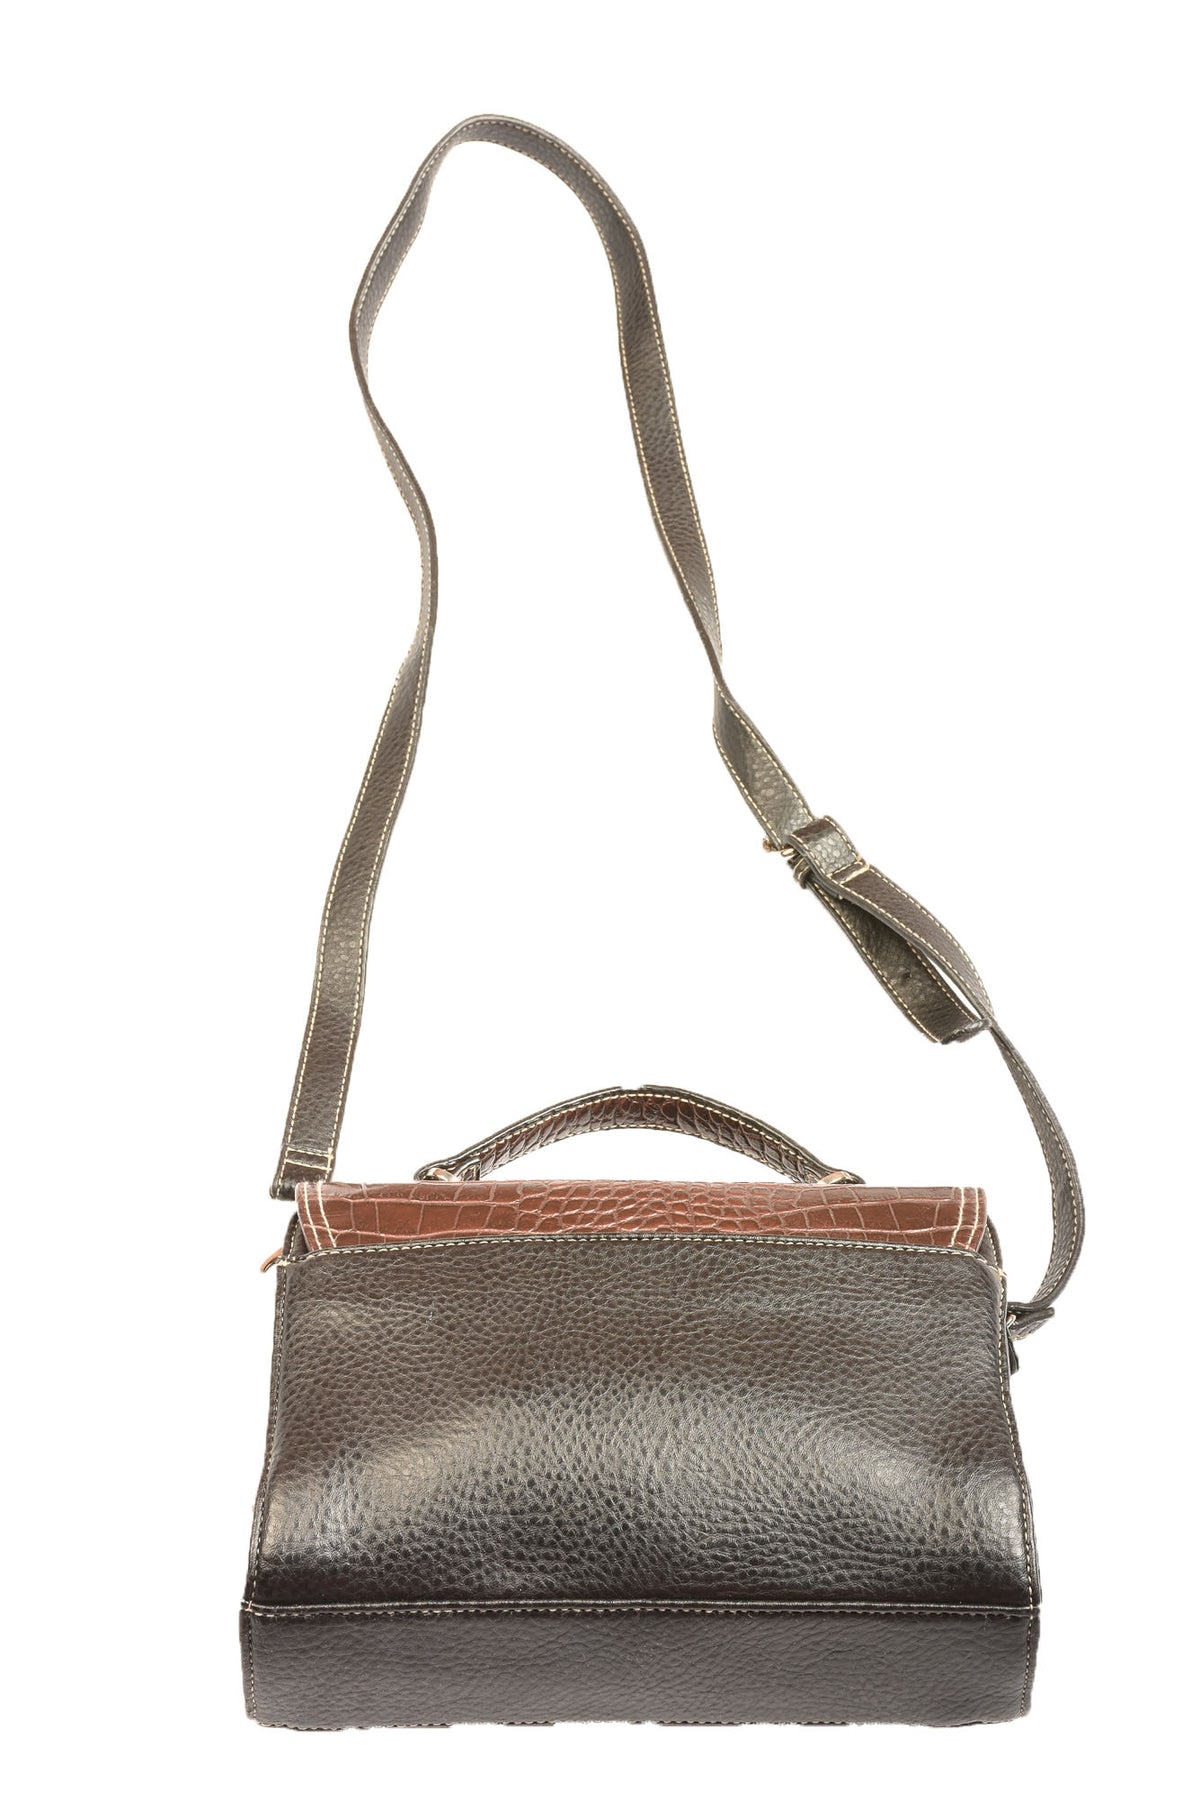 Handbag By Rosetti